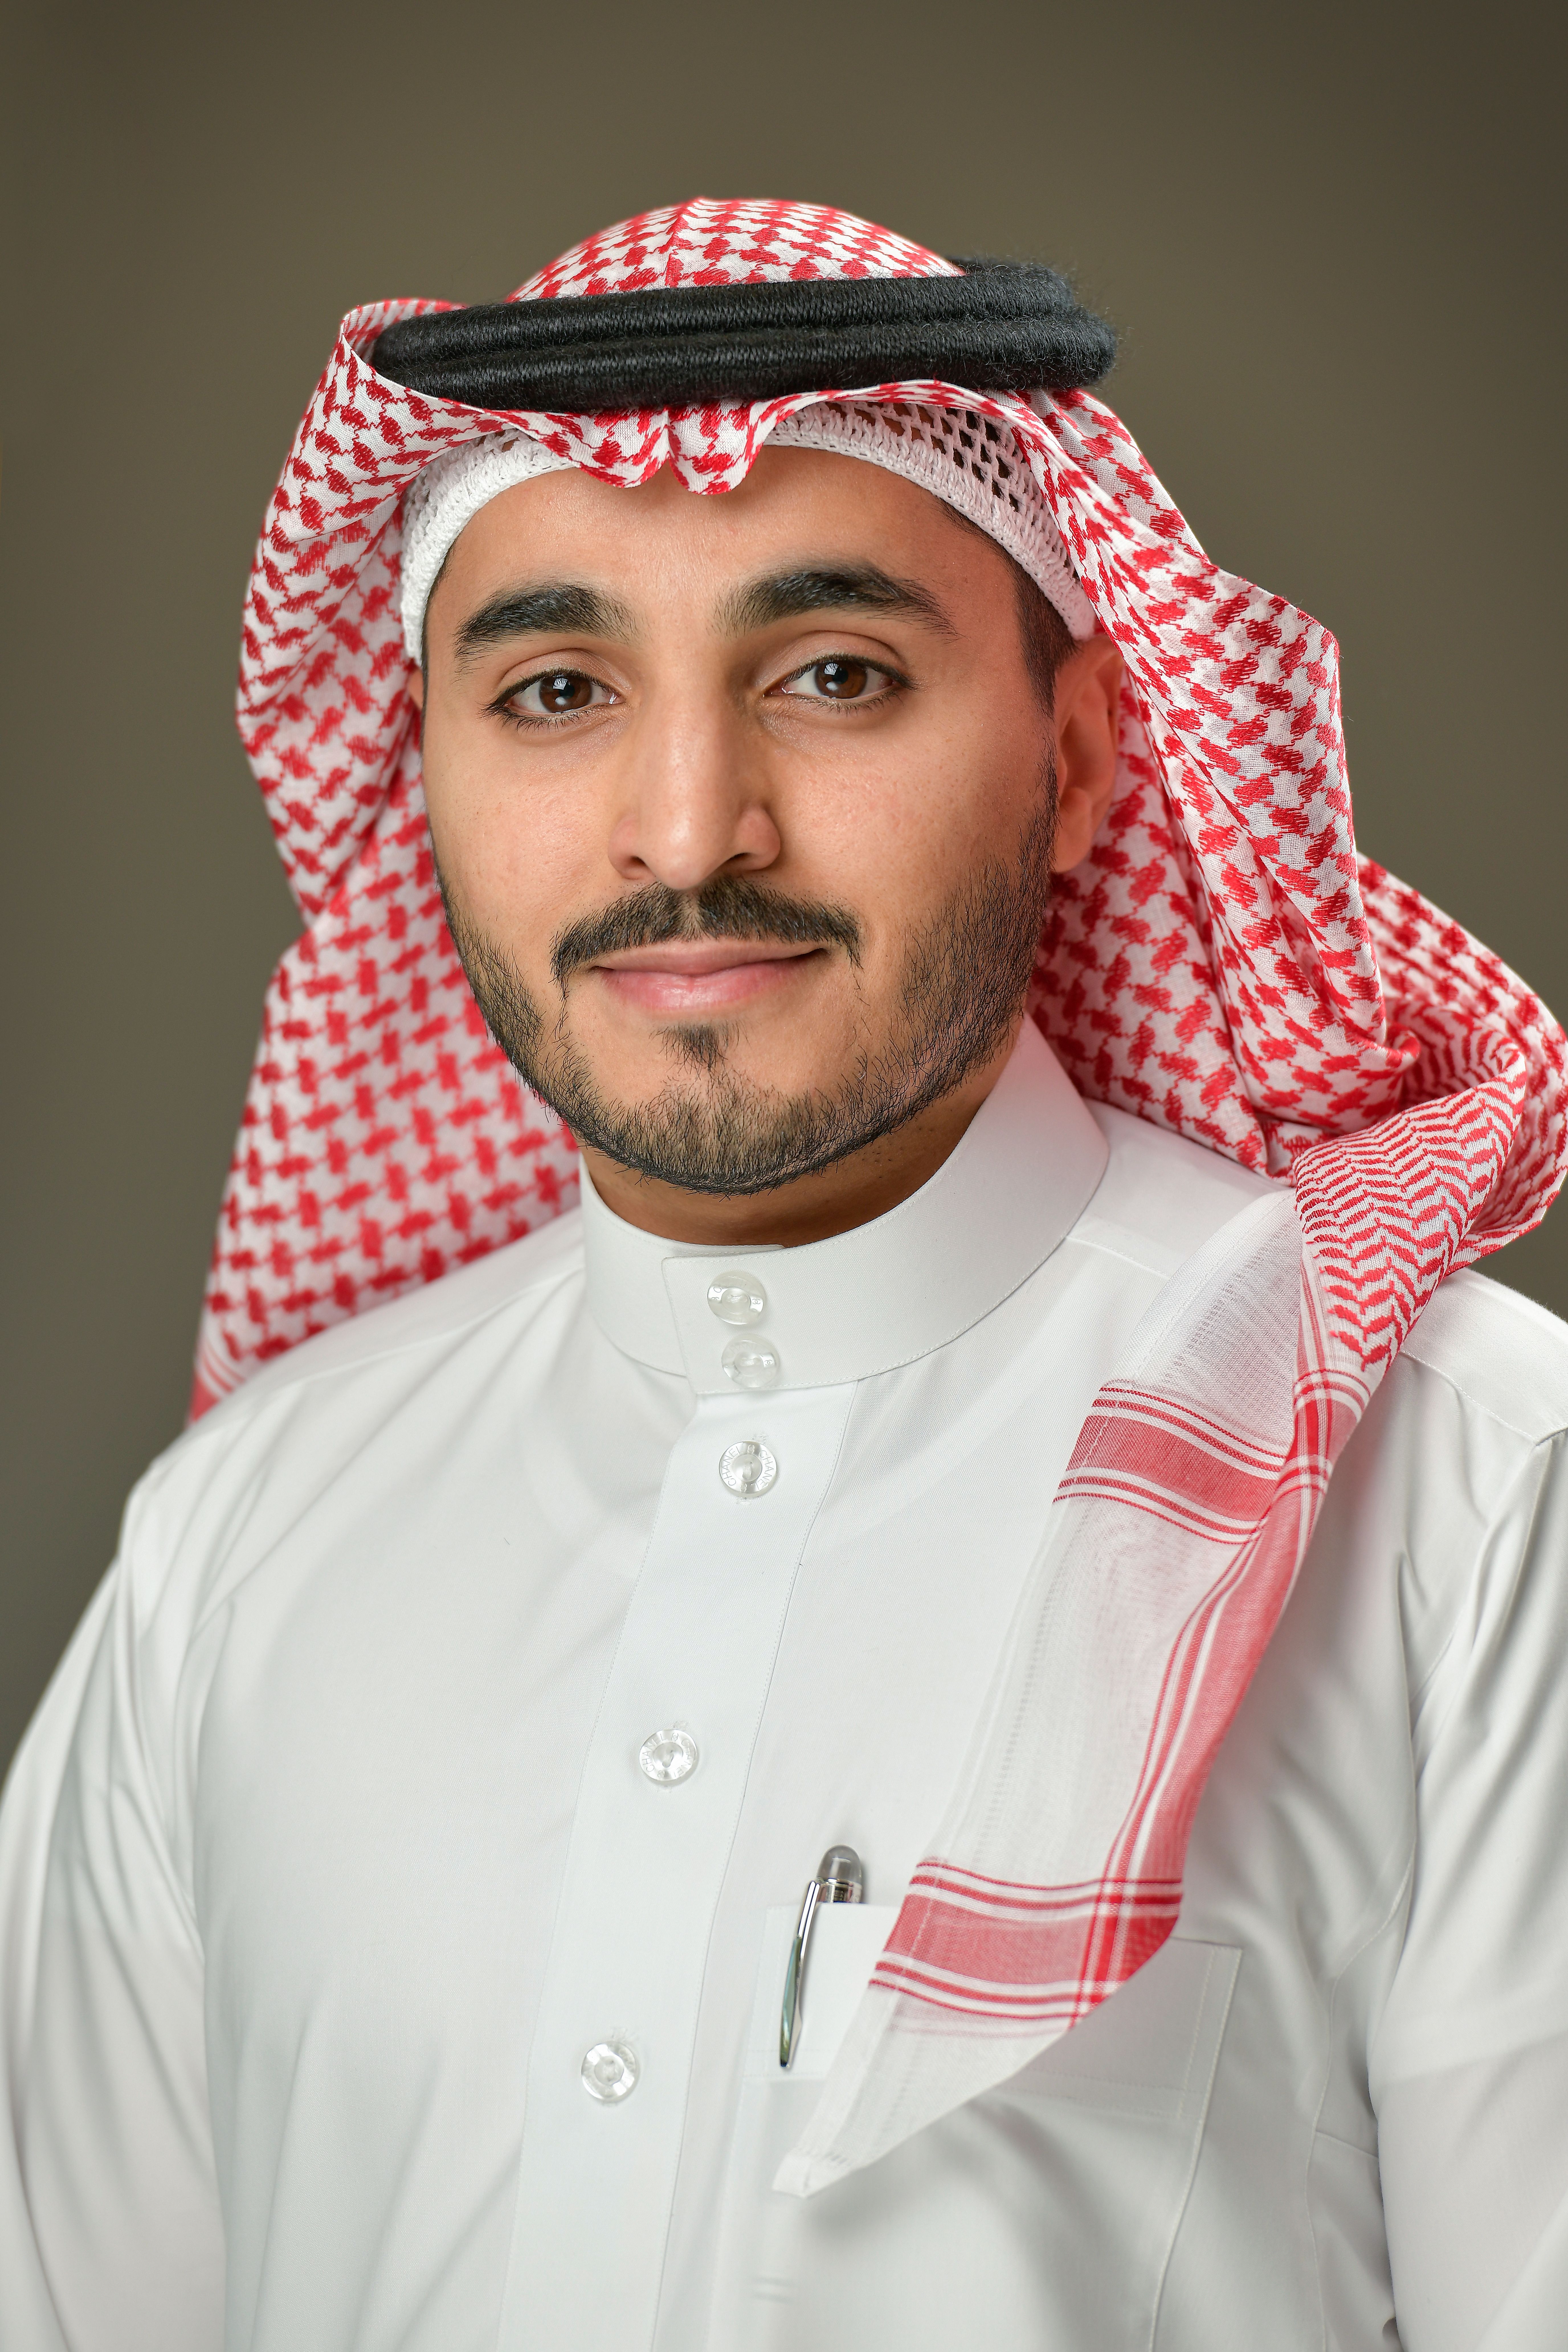 Mohammed Al Twaijri